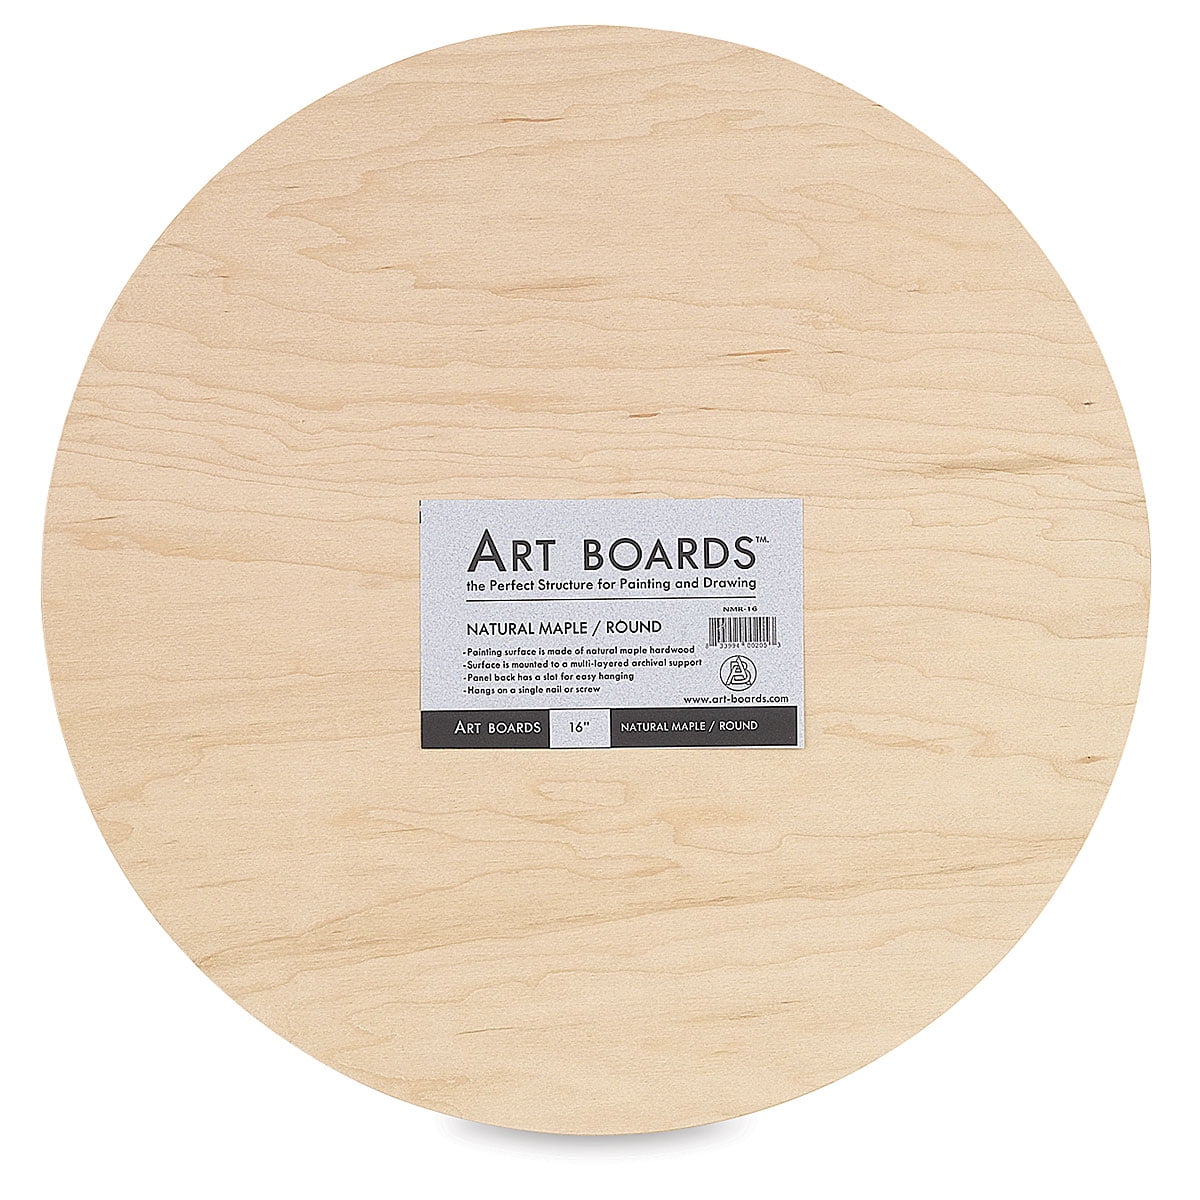 Soho Urban Artist Canvas Texture Painting Boards - 2.3mm Stock Textured Canvas Boards for Painting, Practice, Students, Bulk, All Media, & More! - [